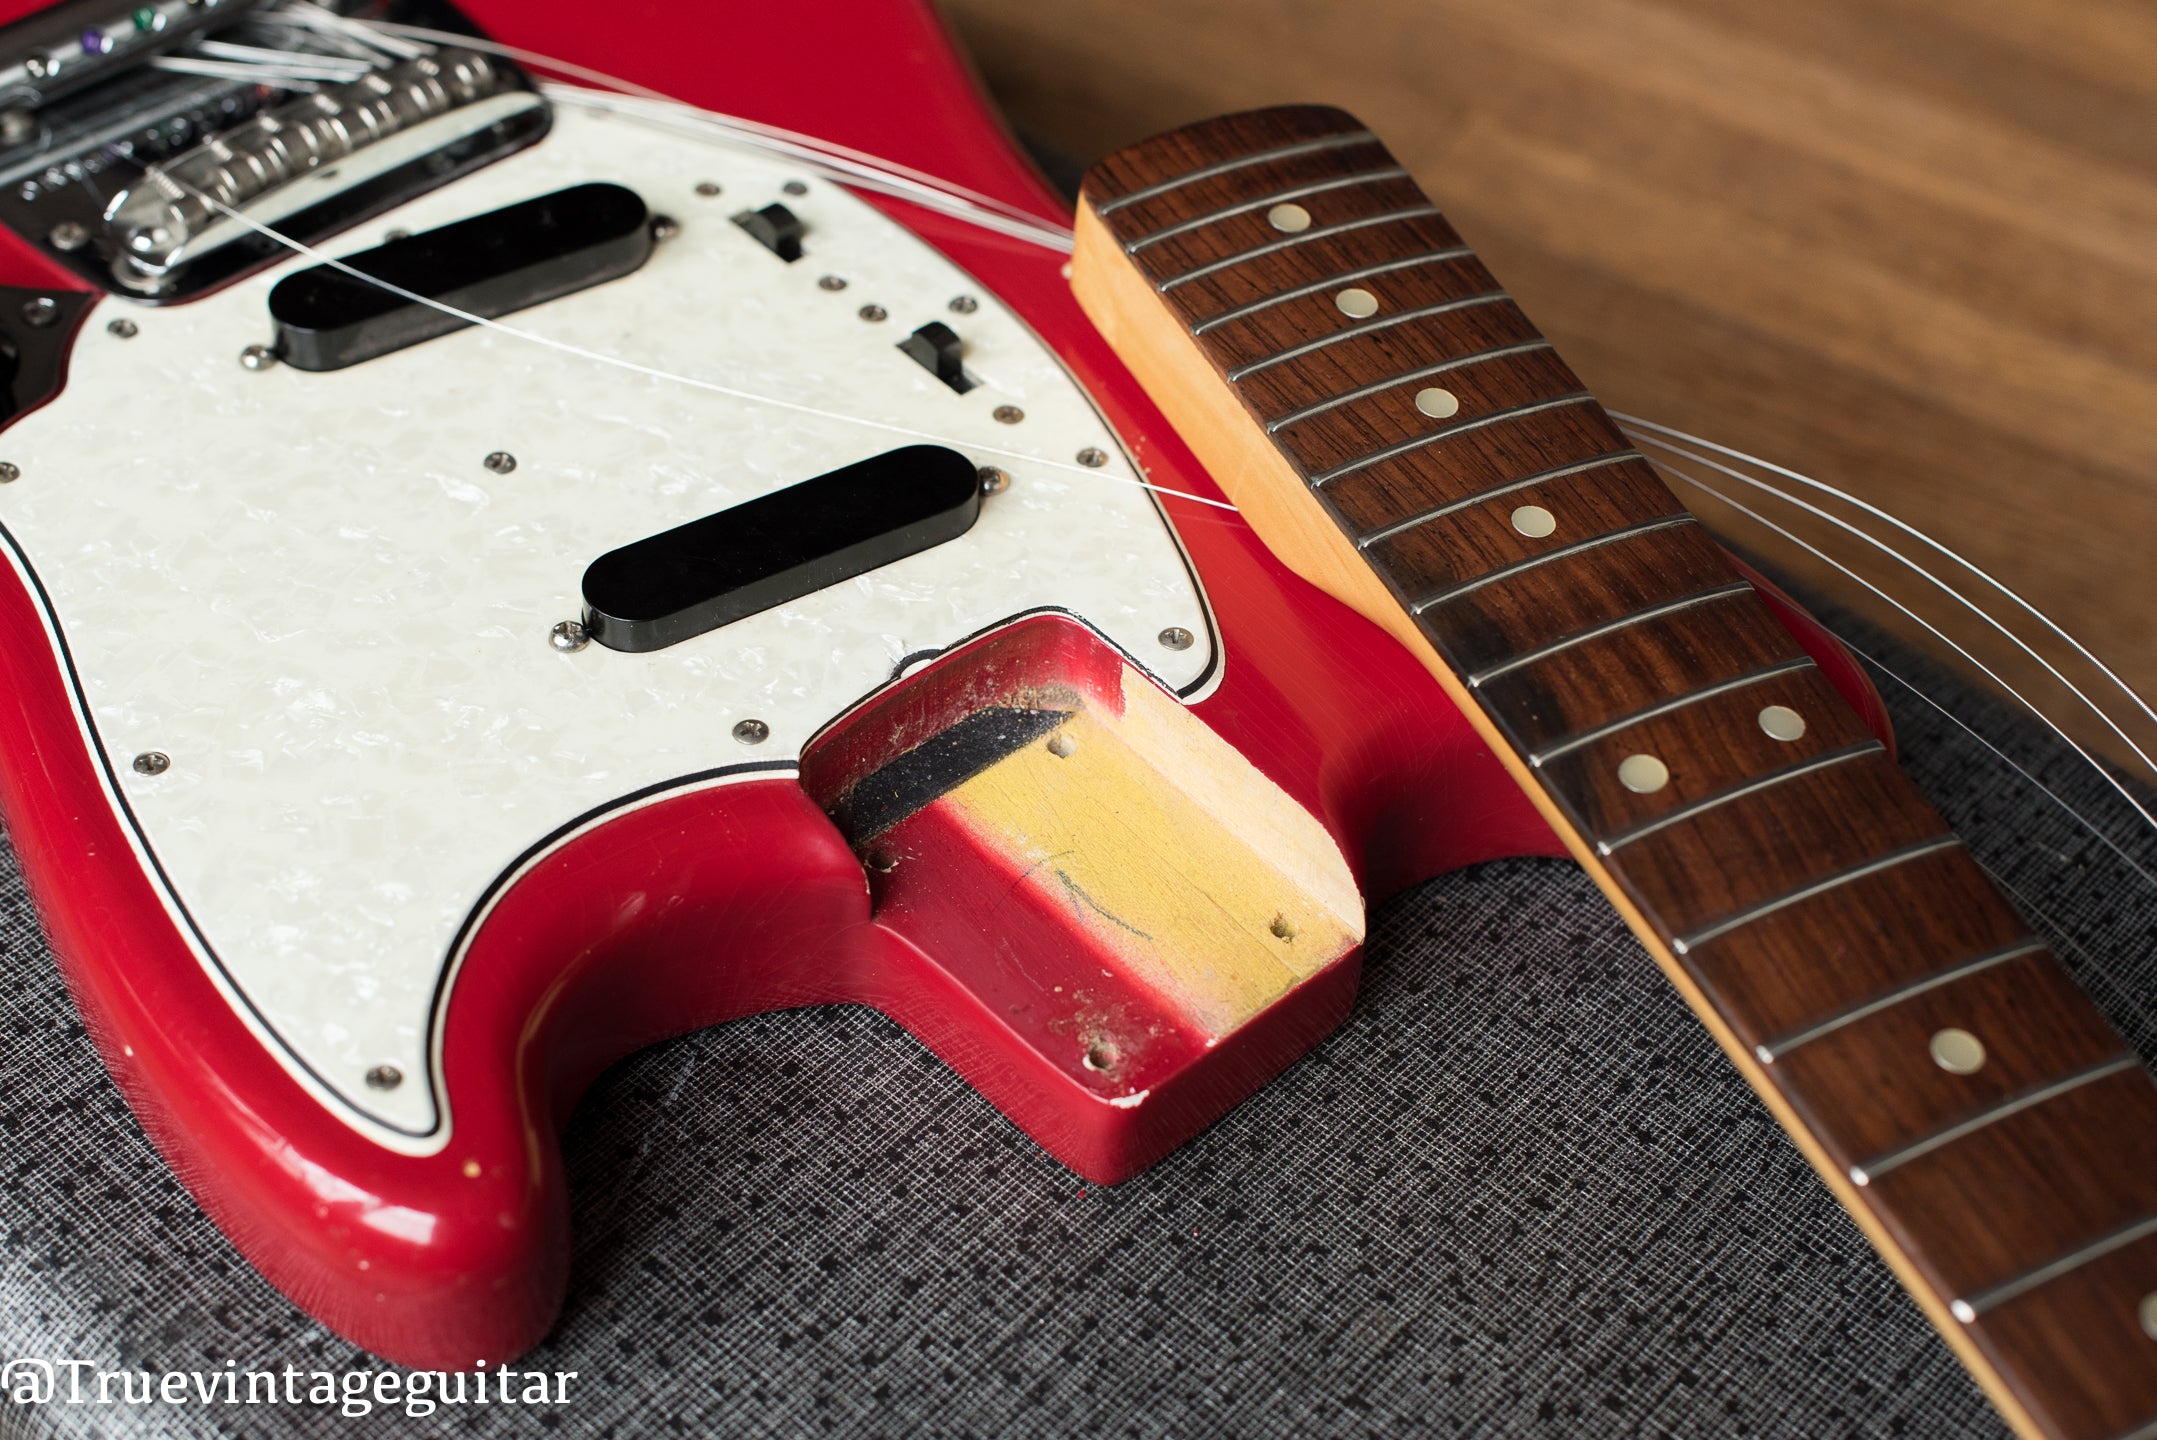 Fender Mustang neck pocket paint stick mark